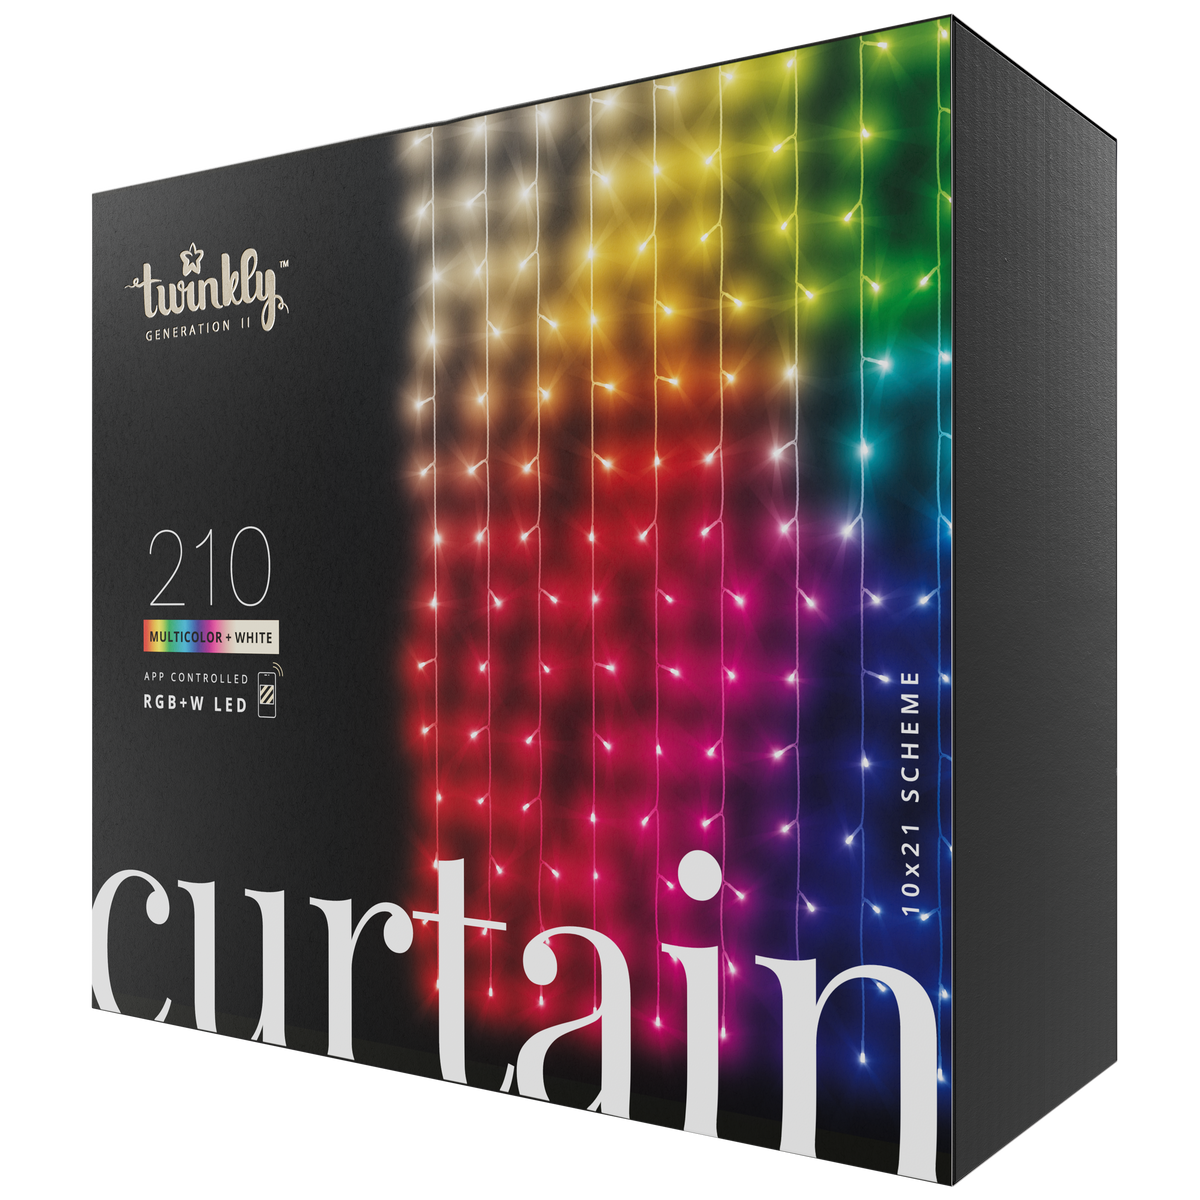 Curtain (многоцветный + белое издание)